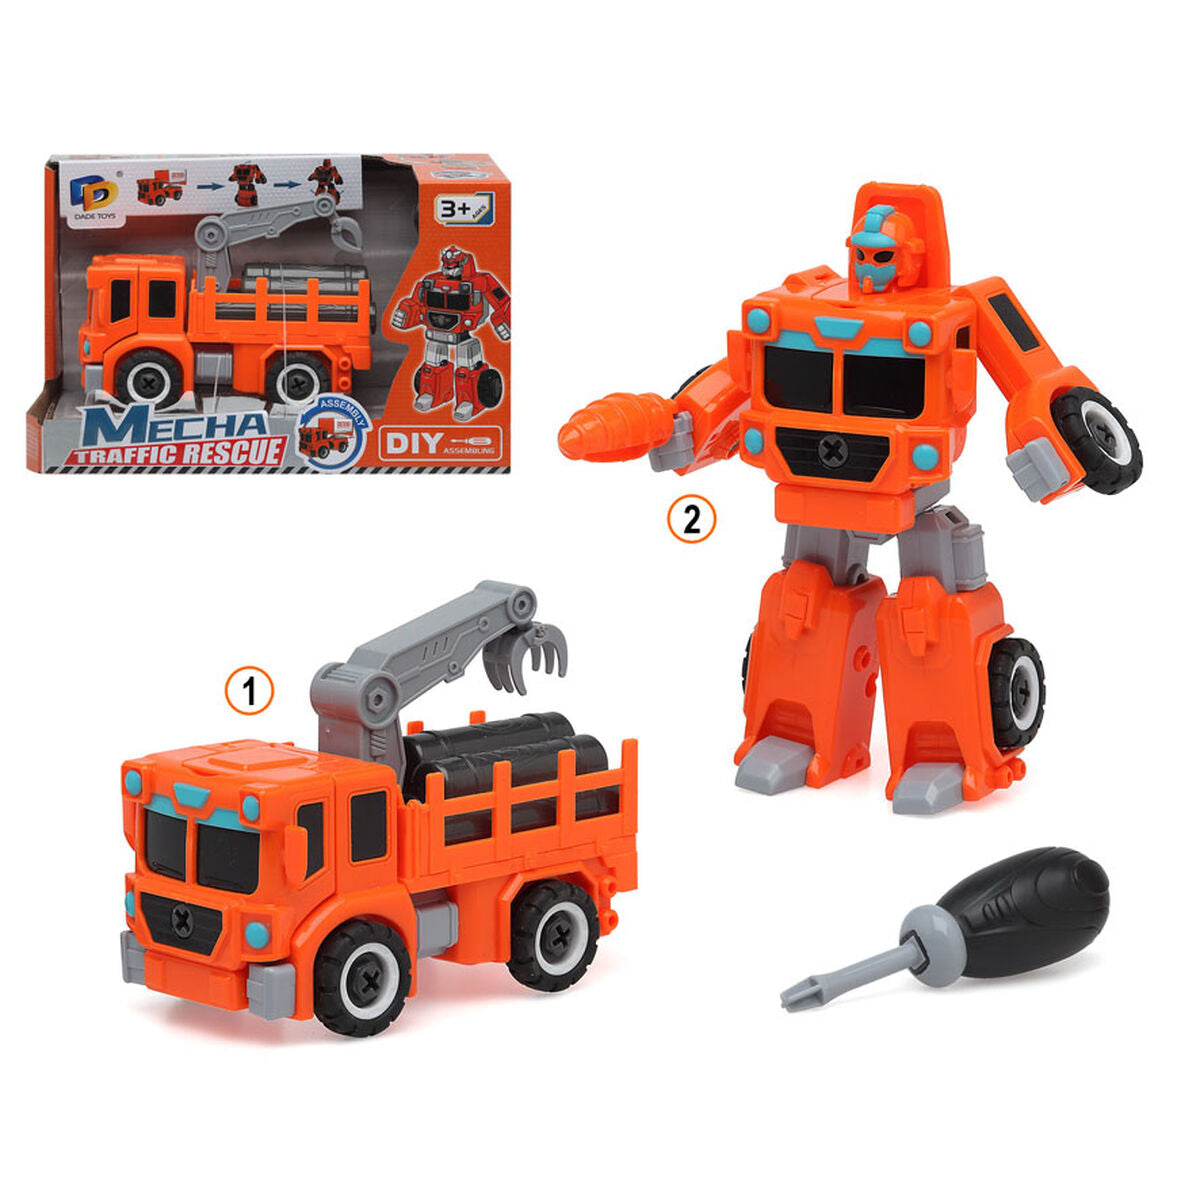 Transformable Super Robot Orange